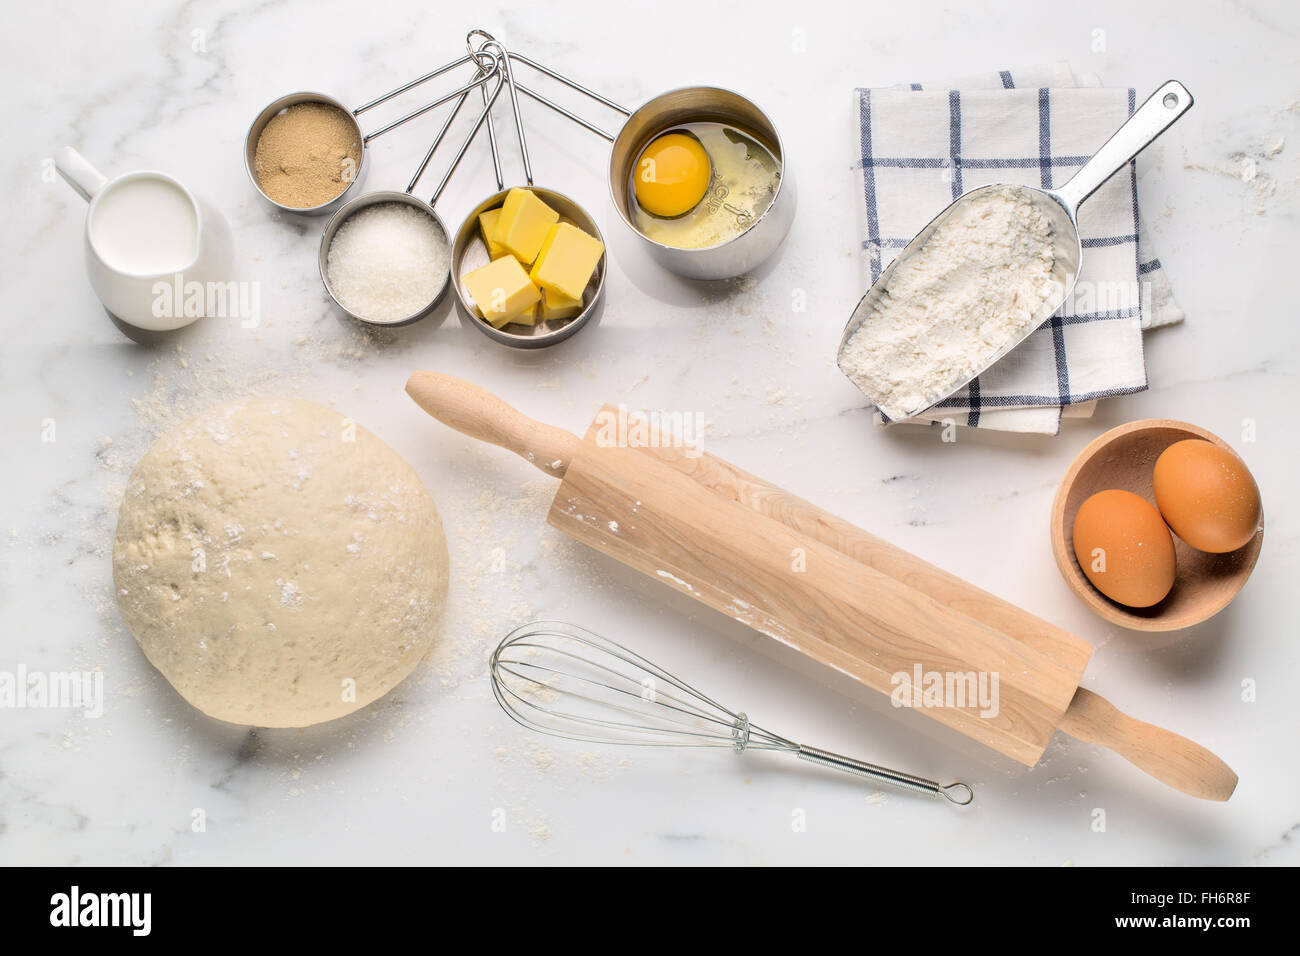 Baking cake, dough recipe ingredients (eggs, flour, milk, butter, sugar) on white table. Stock Photo